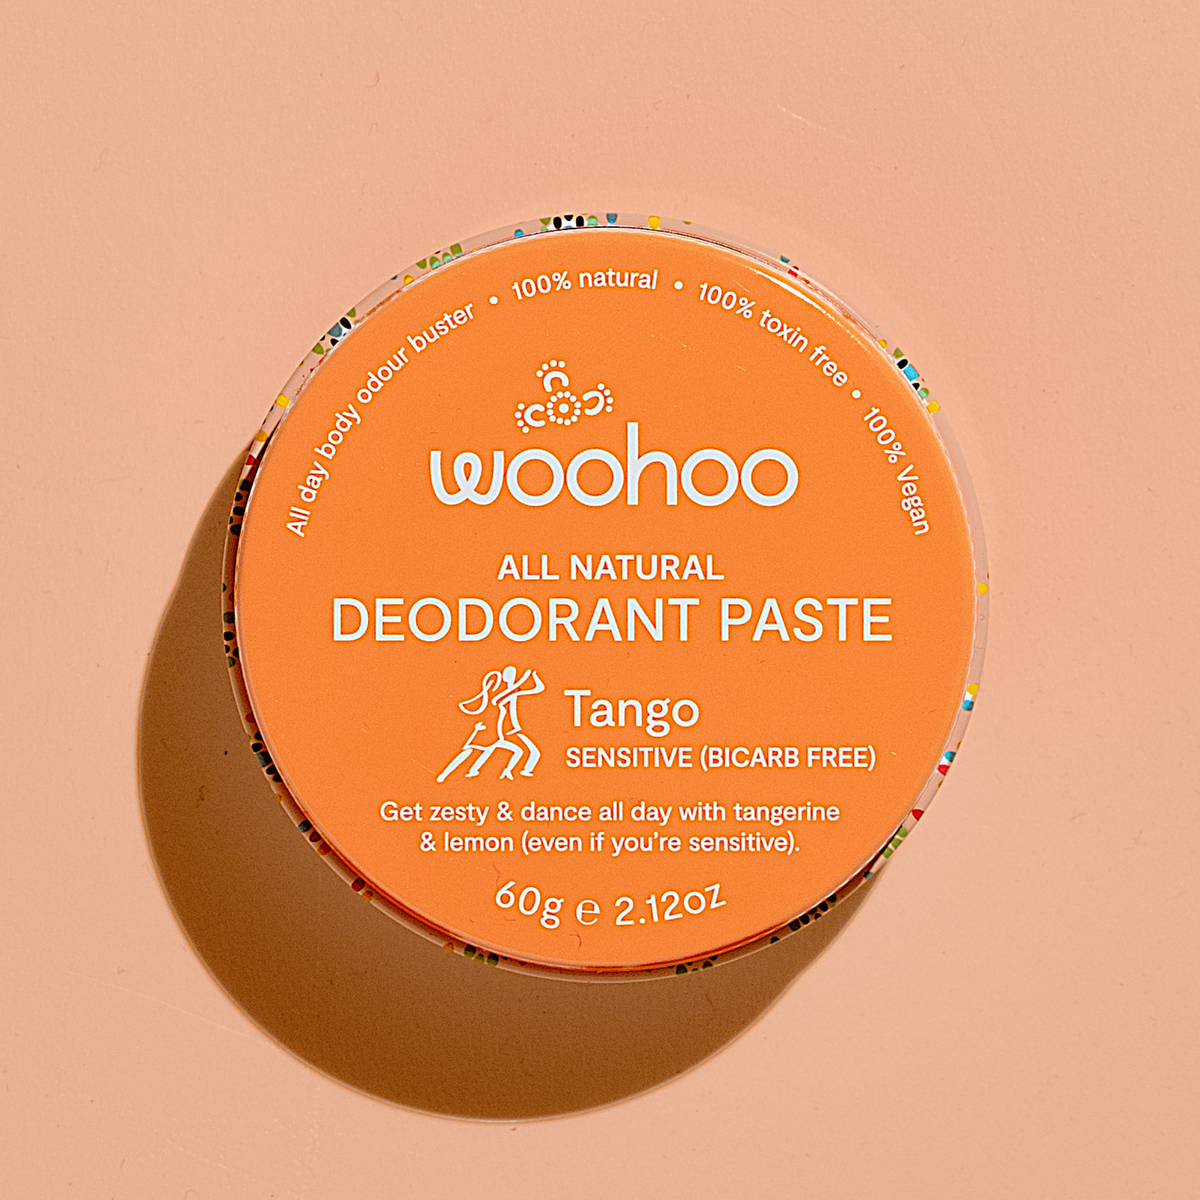 Woohoo All Natural Deodorant Paste (Tango) 60g